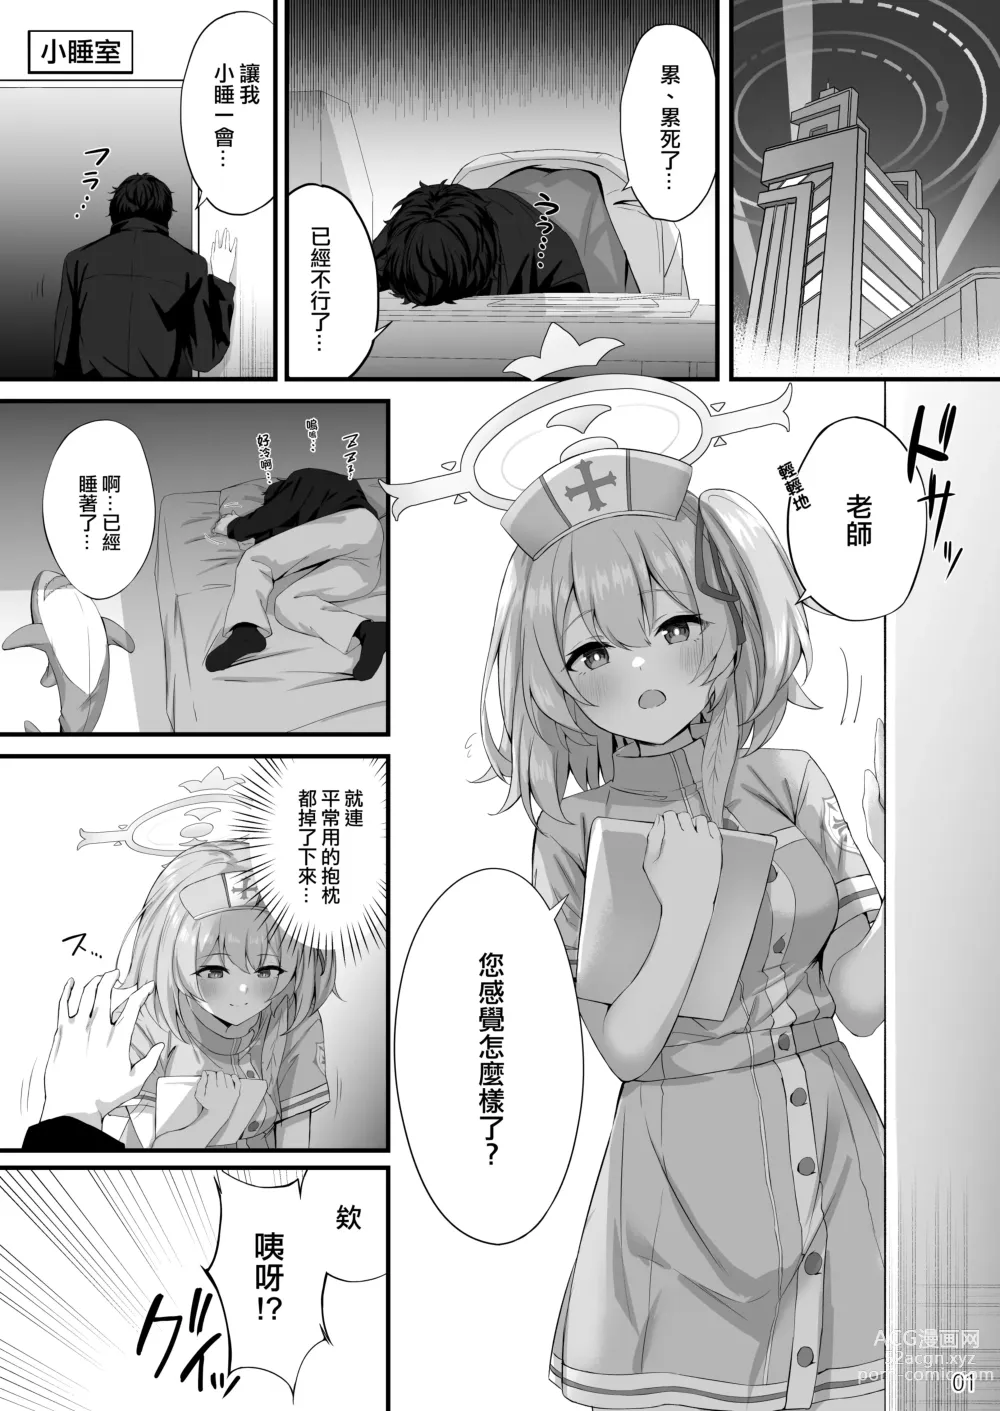 Page 2 of doujinshi 老師、您感覺怎麼樣啊？